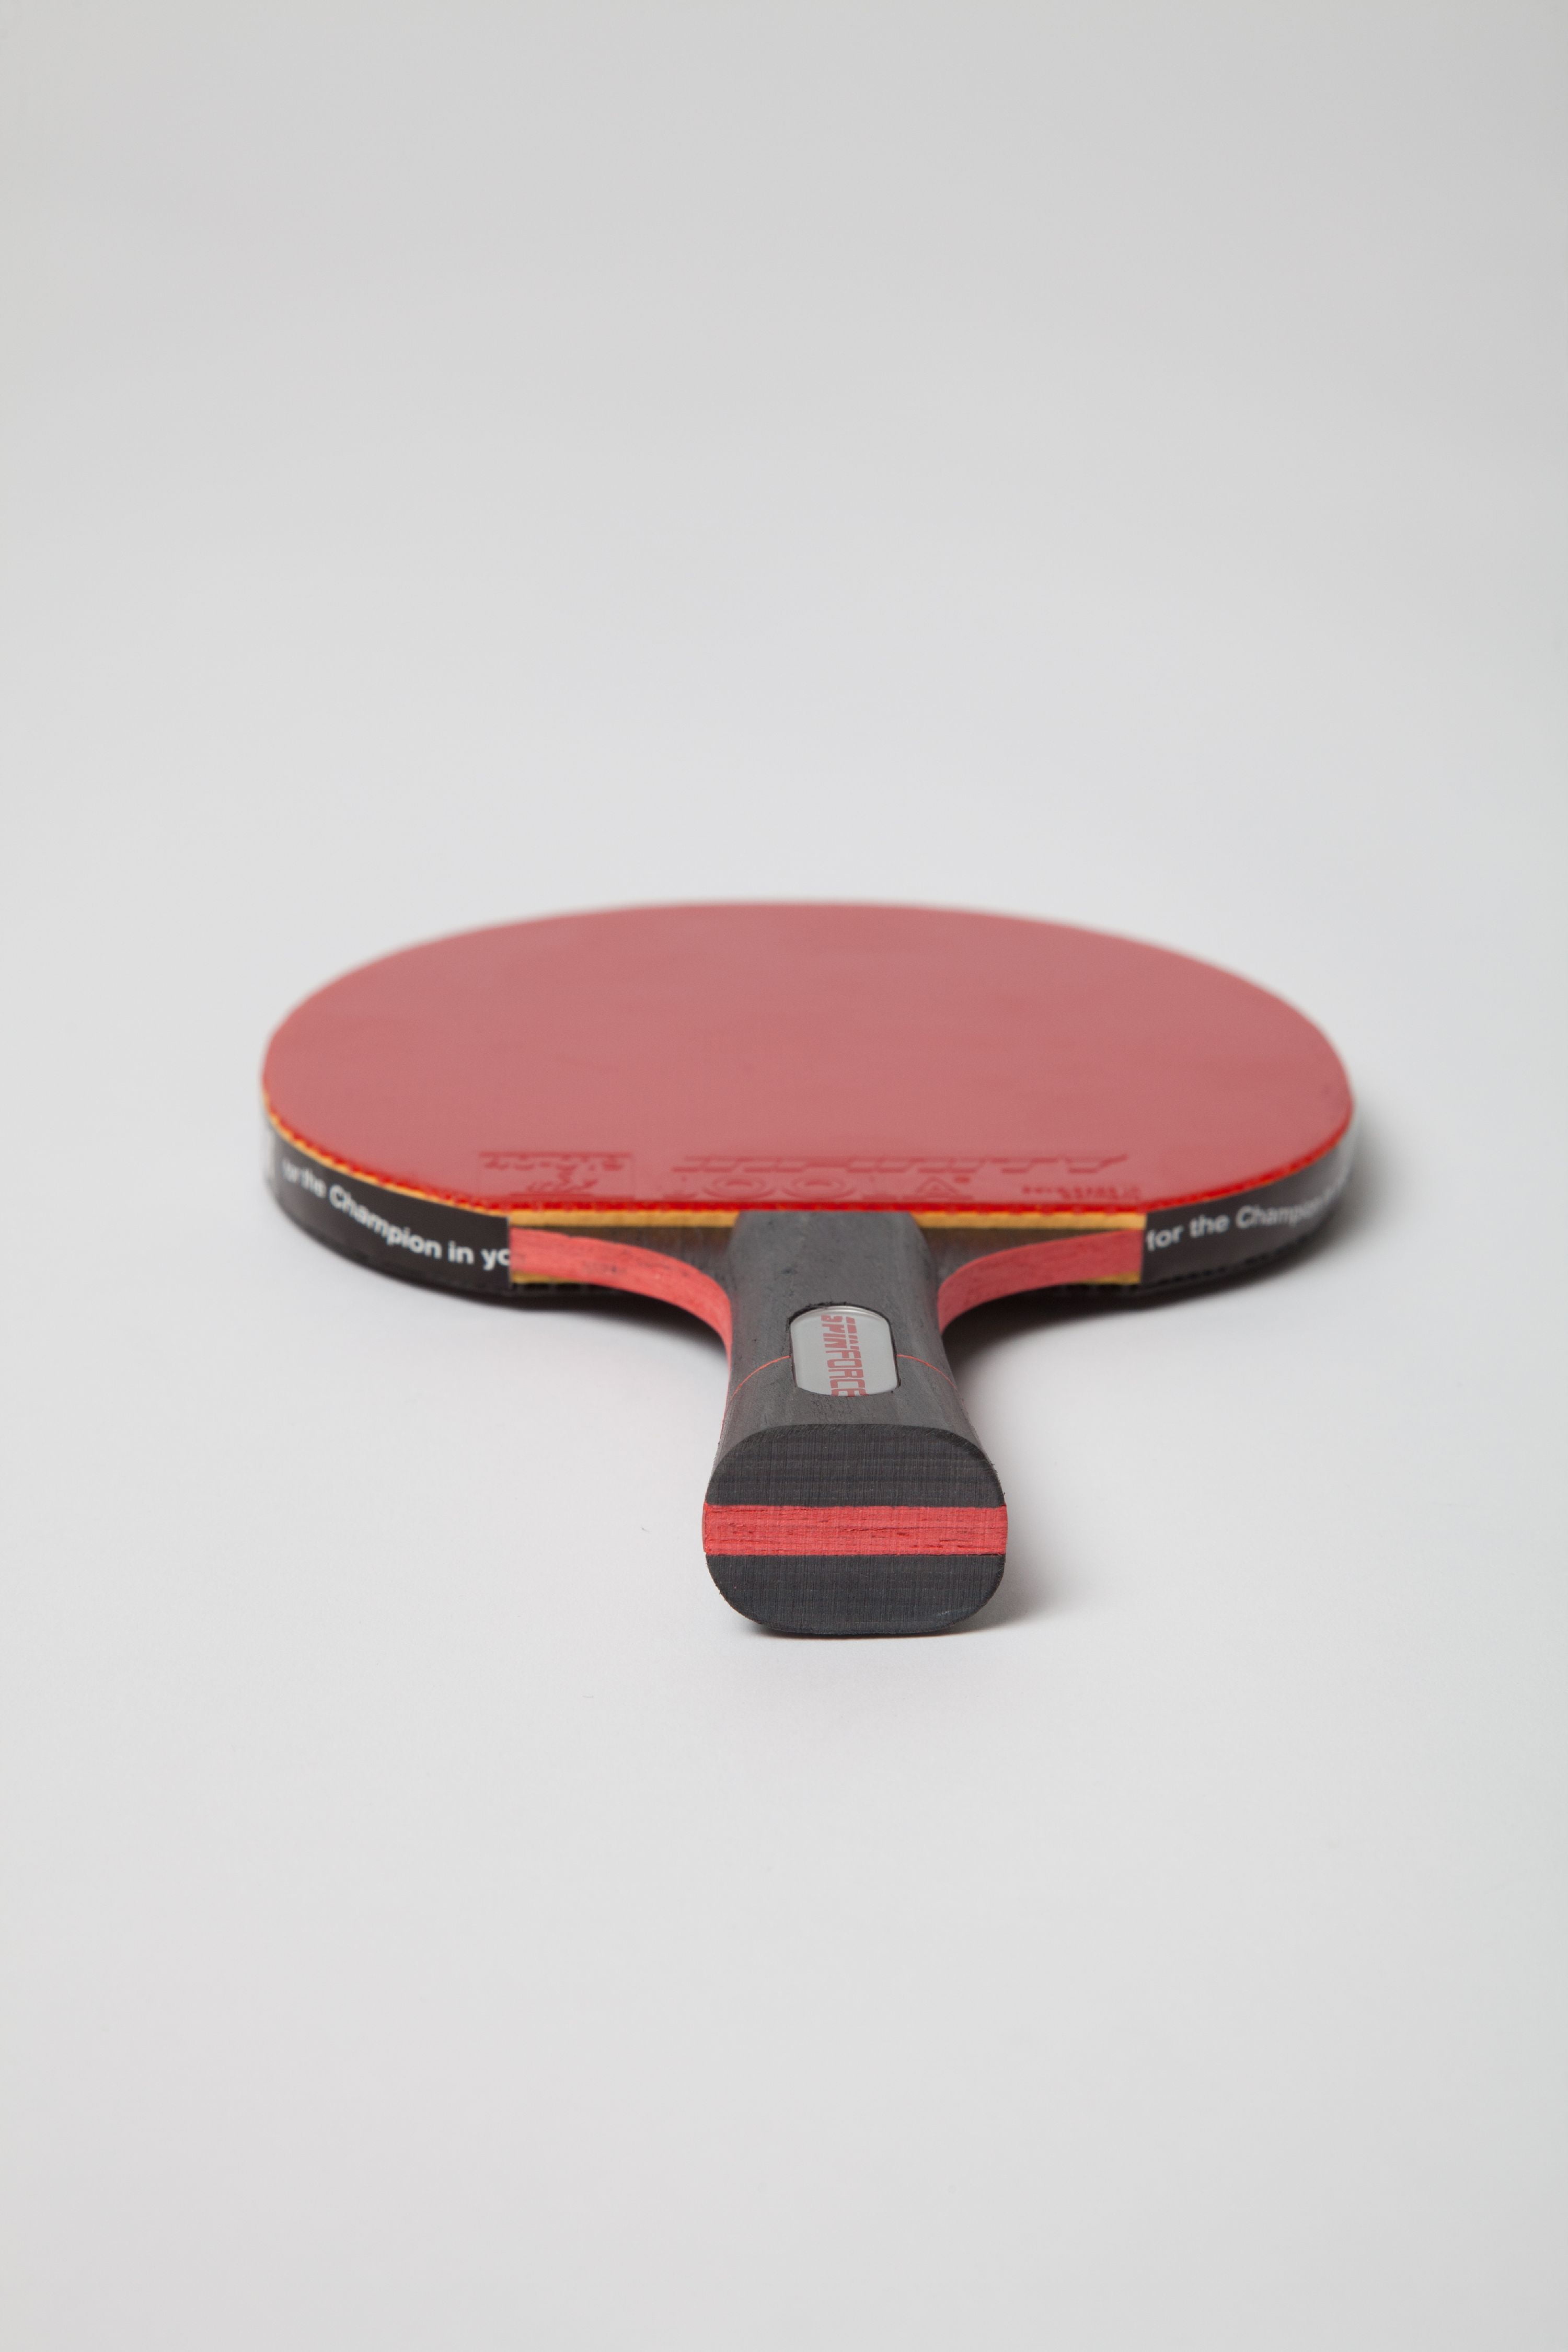 Levantos Premium Speed Control Carbon Table Tennis Ping Pong Racket Paddle ITTF 